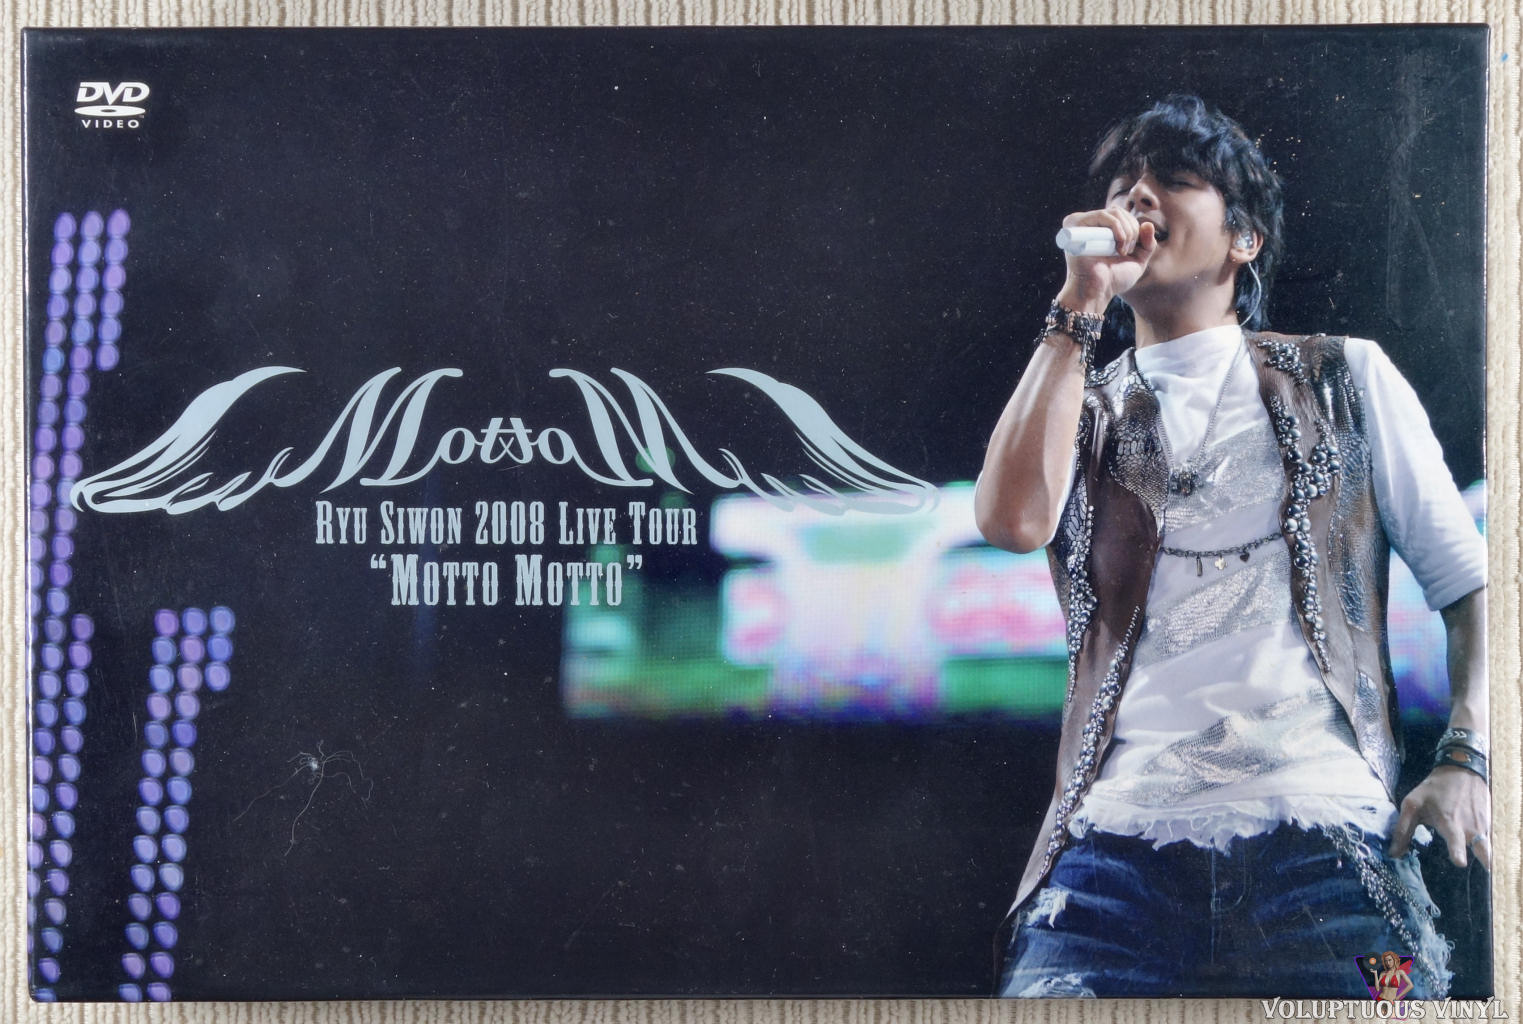 Ryu Siwon – Ryu Siwon 2008 Live Tour Motto Motto (2008) 3xDVD